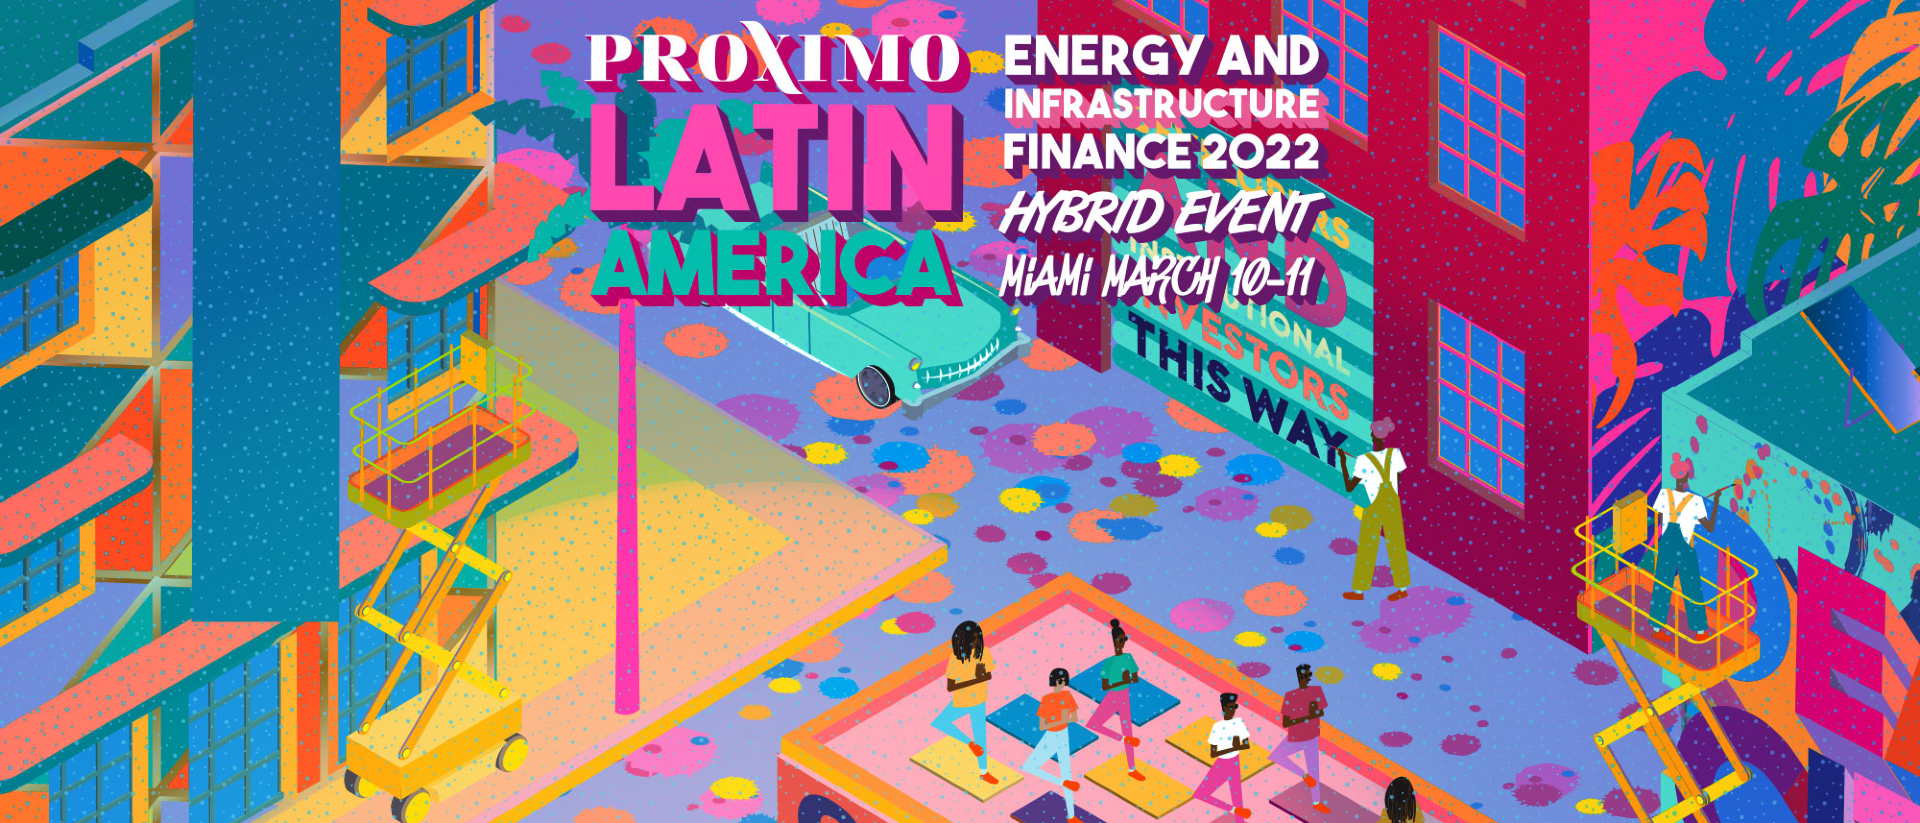 Proximo Latin America 2022: Energy & Infrastructure Finance